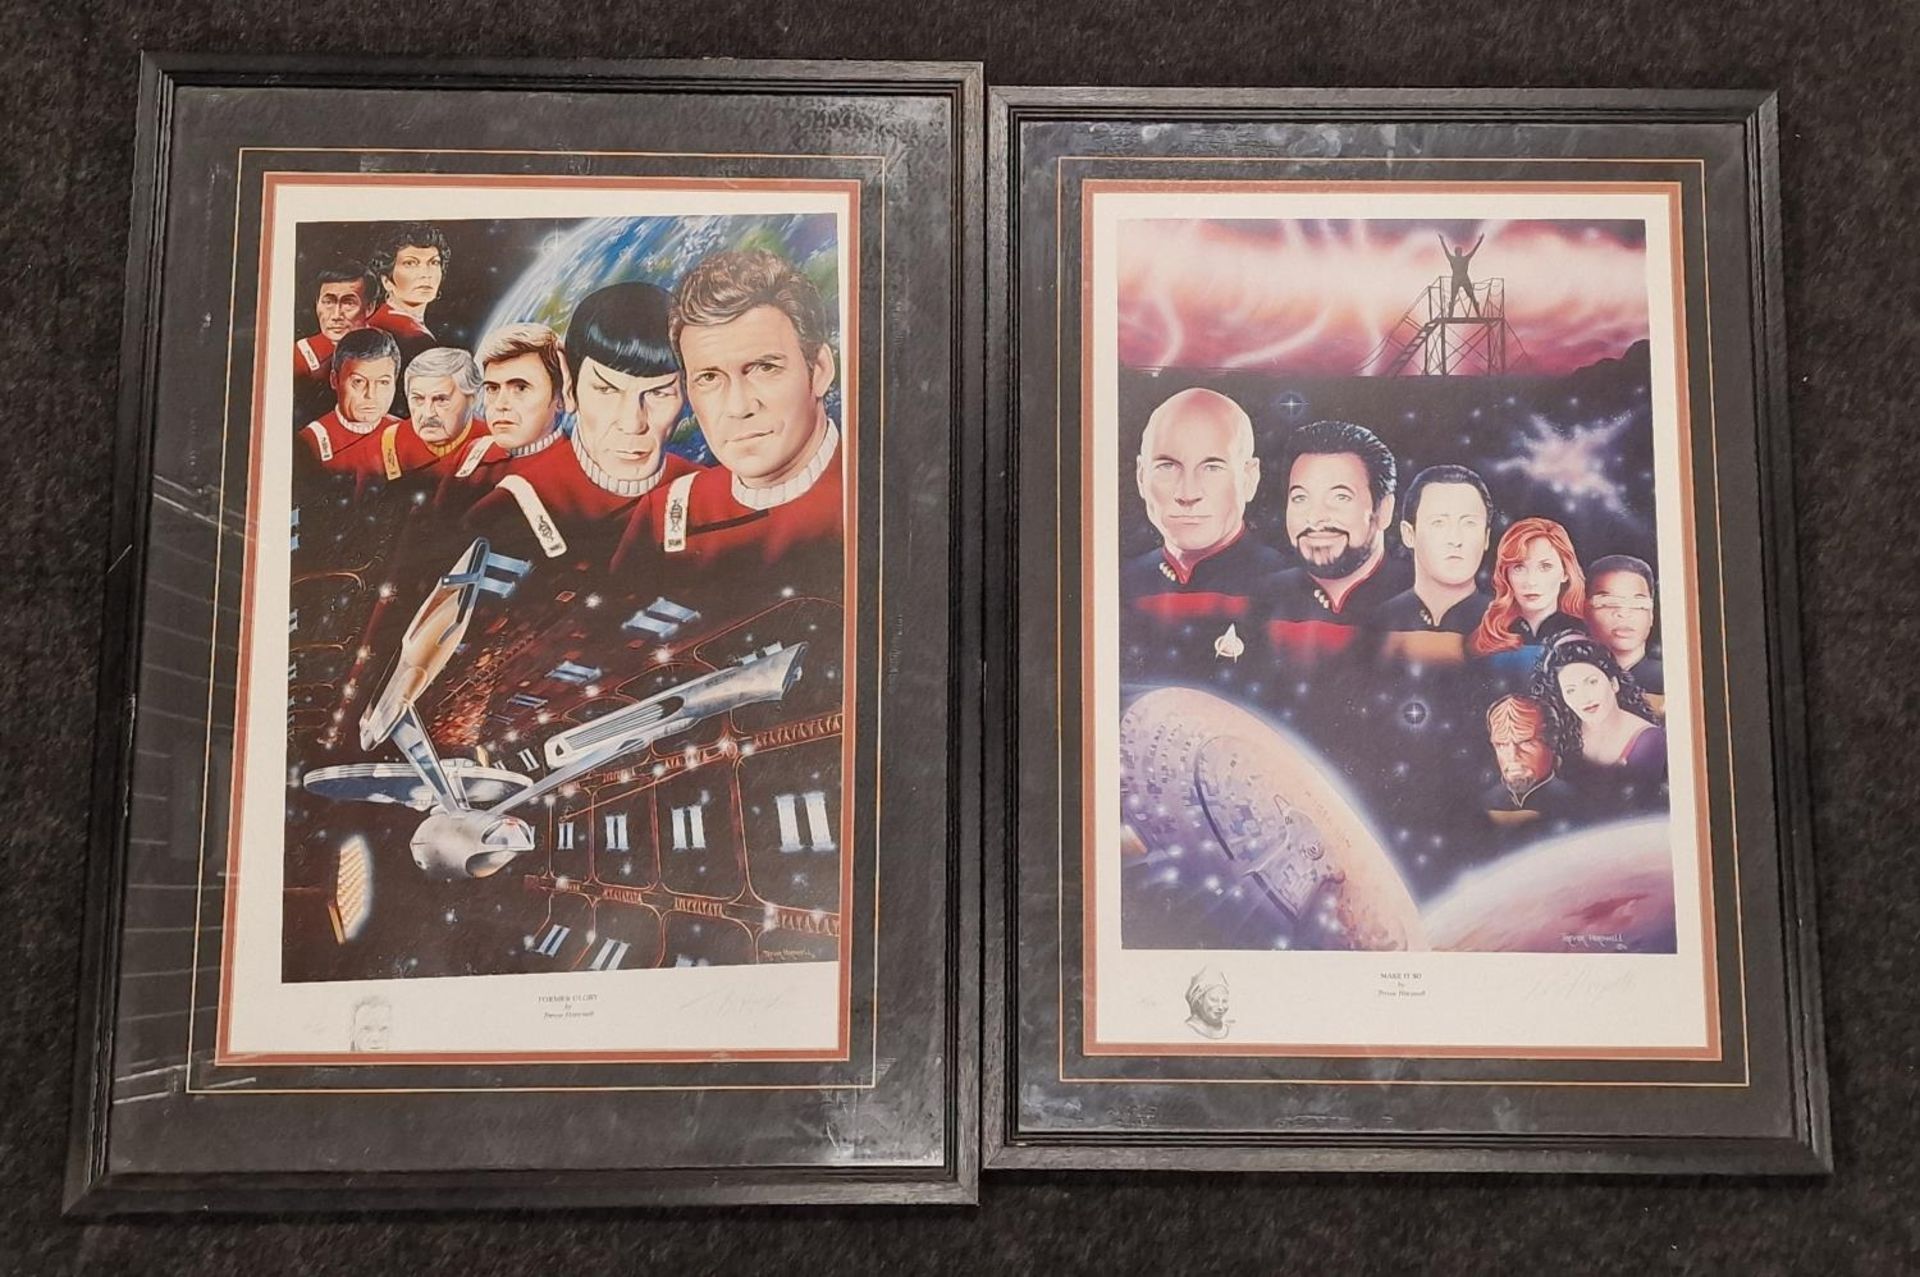 Two framed and glazed Trevor Horsewell Star Trek prints "Former Glory" and "Make It So".